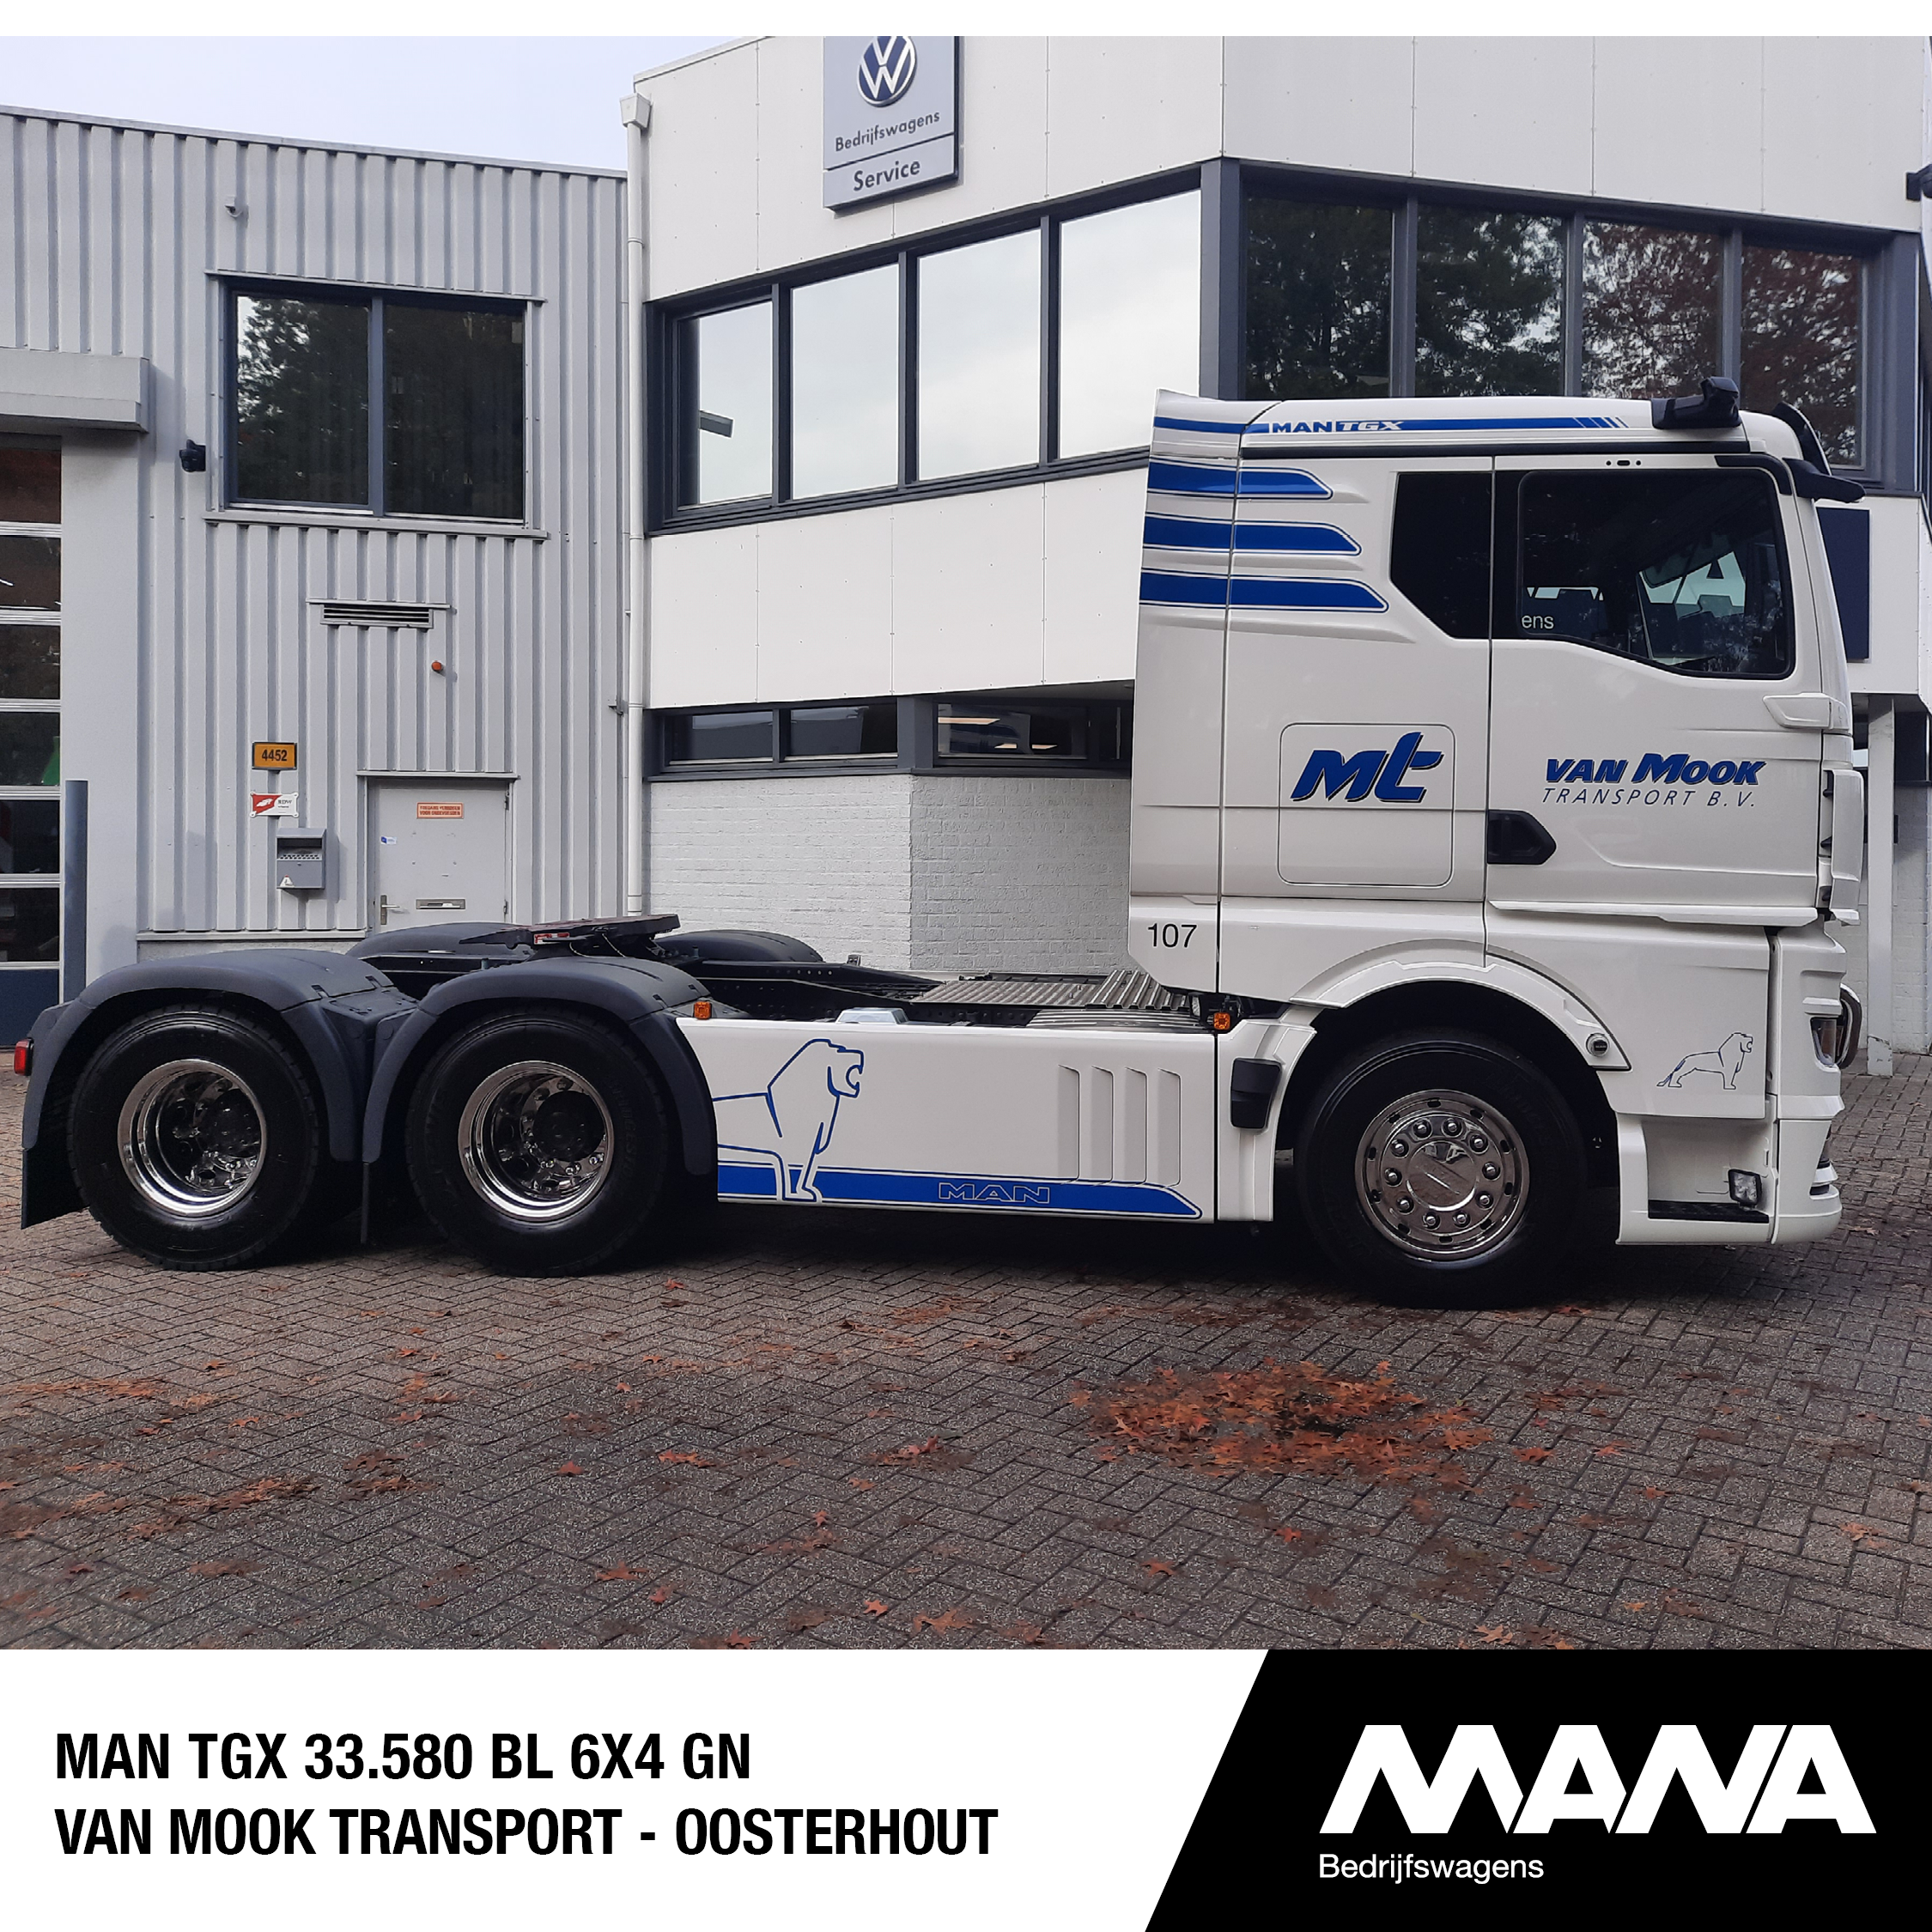 MAN TGX 33.580 BL 6x4 GN Van Mook Transport - Oosterhout